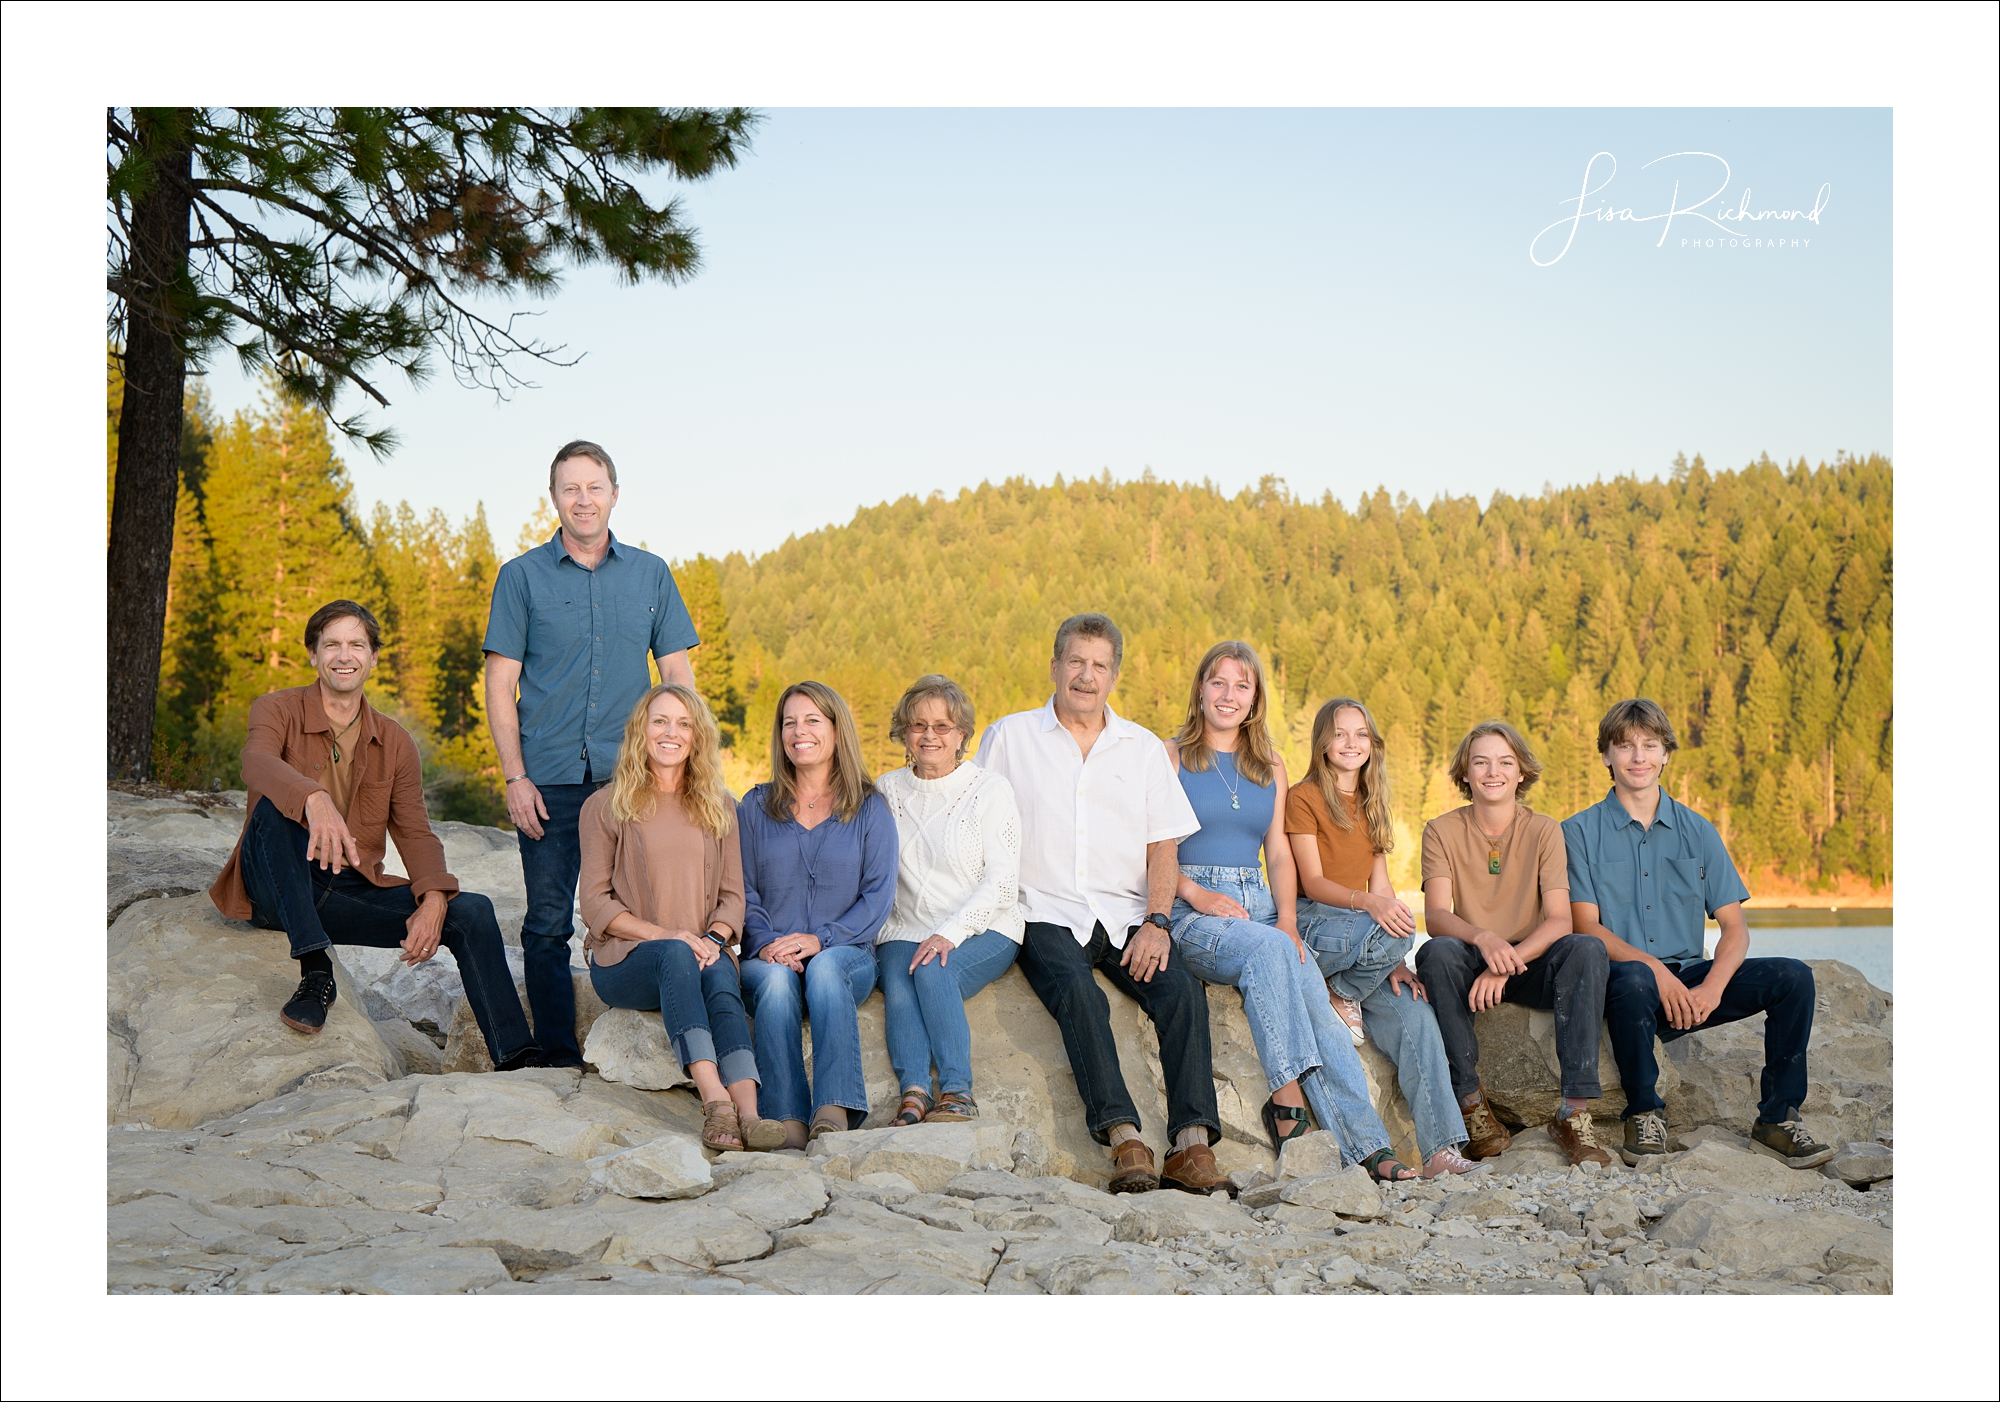 Schlavin/Pittman families at Sly Park Lake